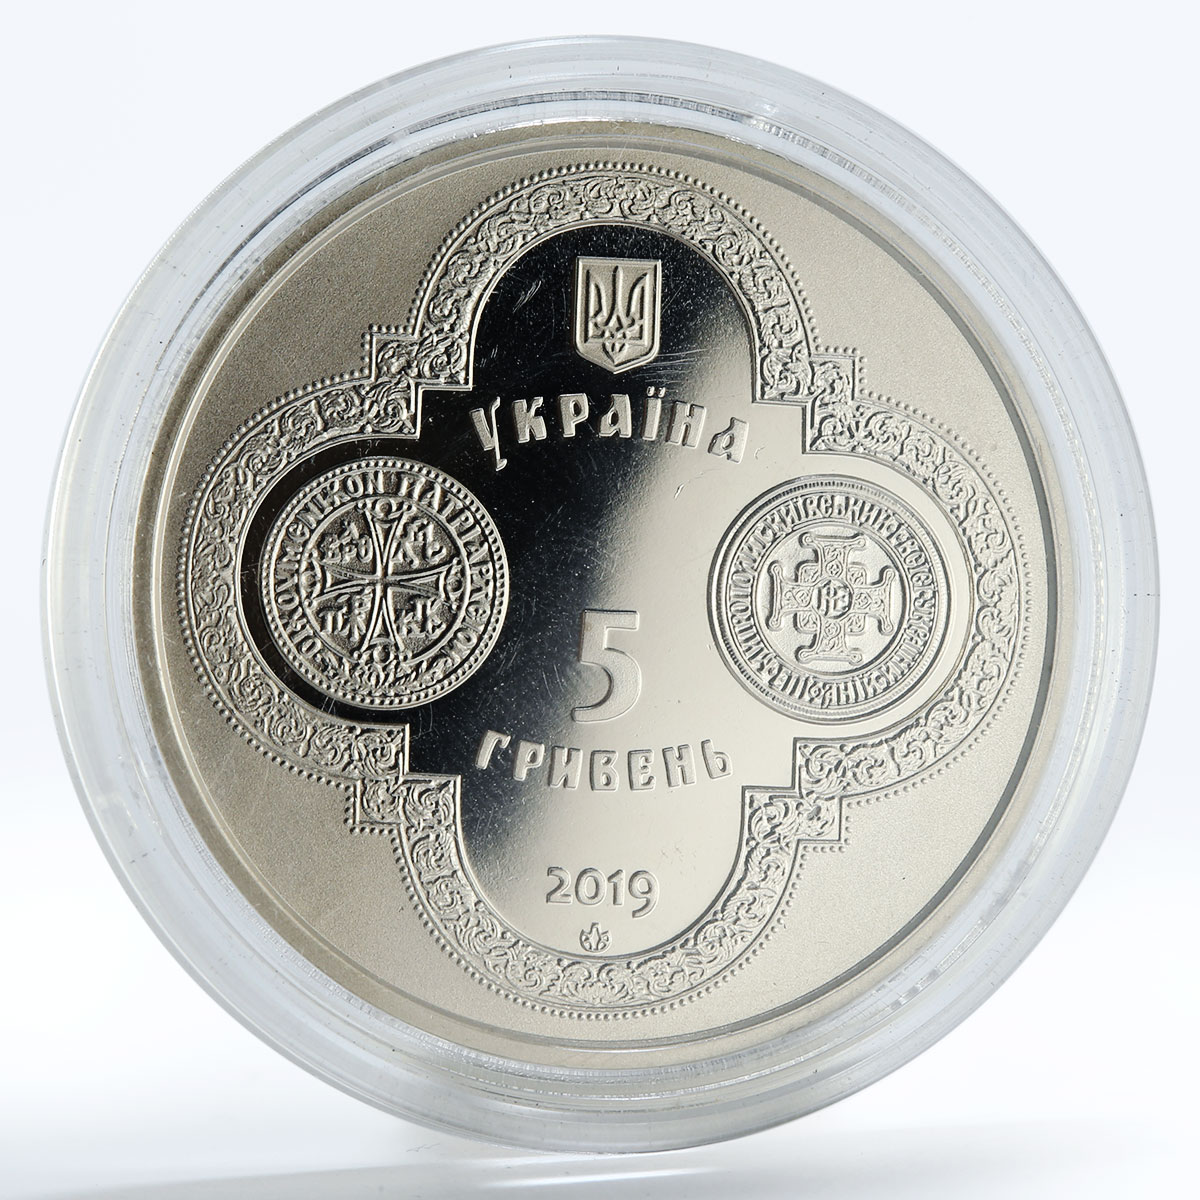 Ukraine 5 hryvnias Autocephaly of Orthodox Church of Ukraine nickel coin 2019